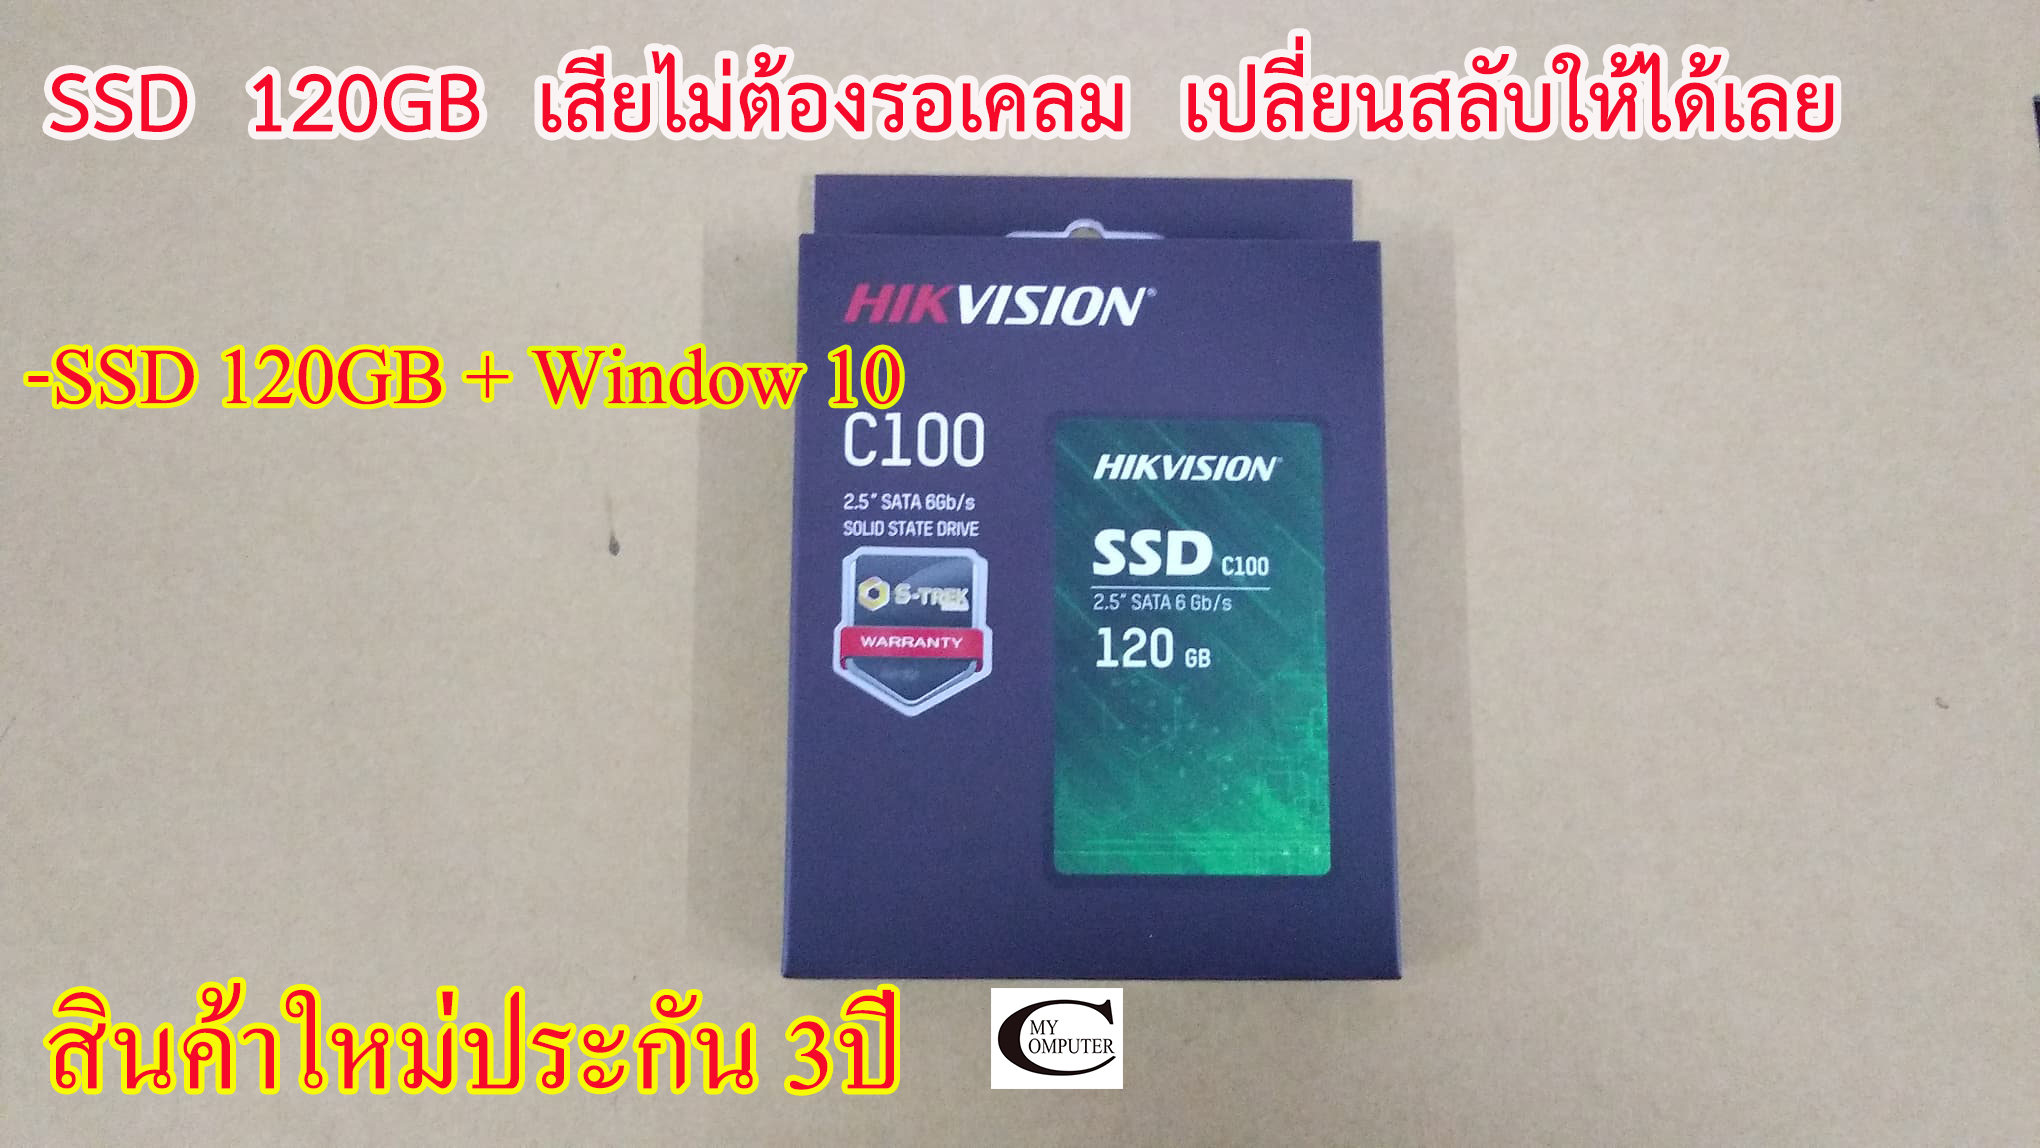 SSD 120GB + Window 10 ( Activate Online) สินค้าใหม่ ประกัน 3ปี